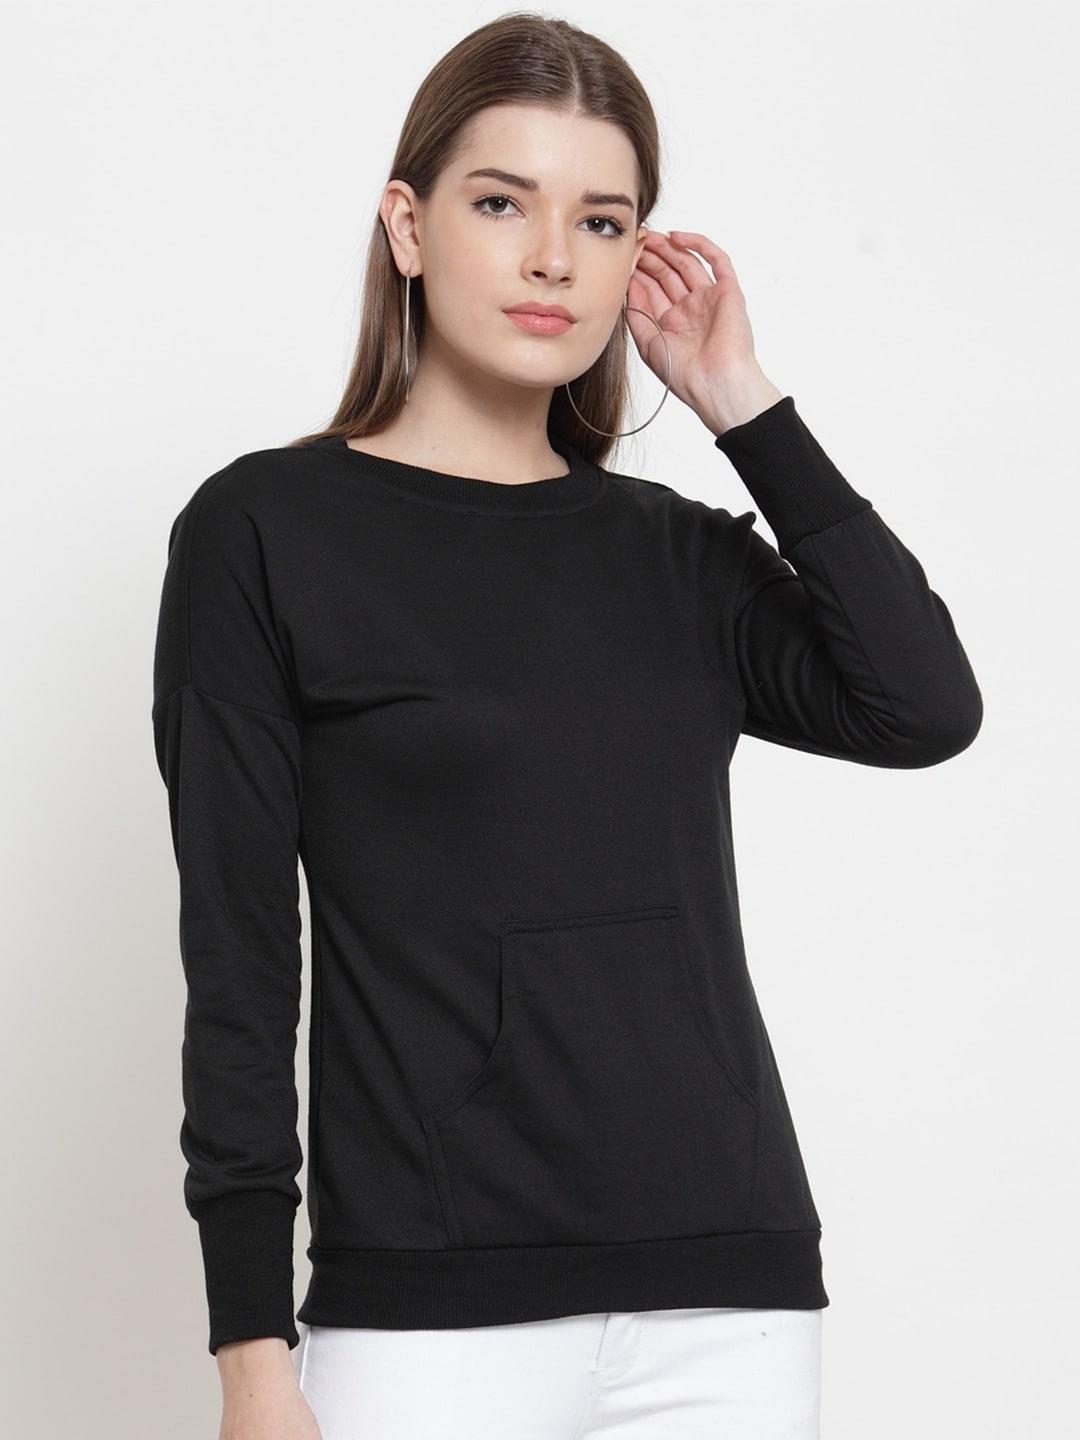 baesd women black sweatshirt